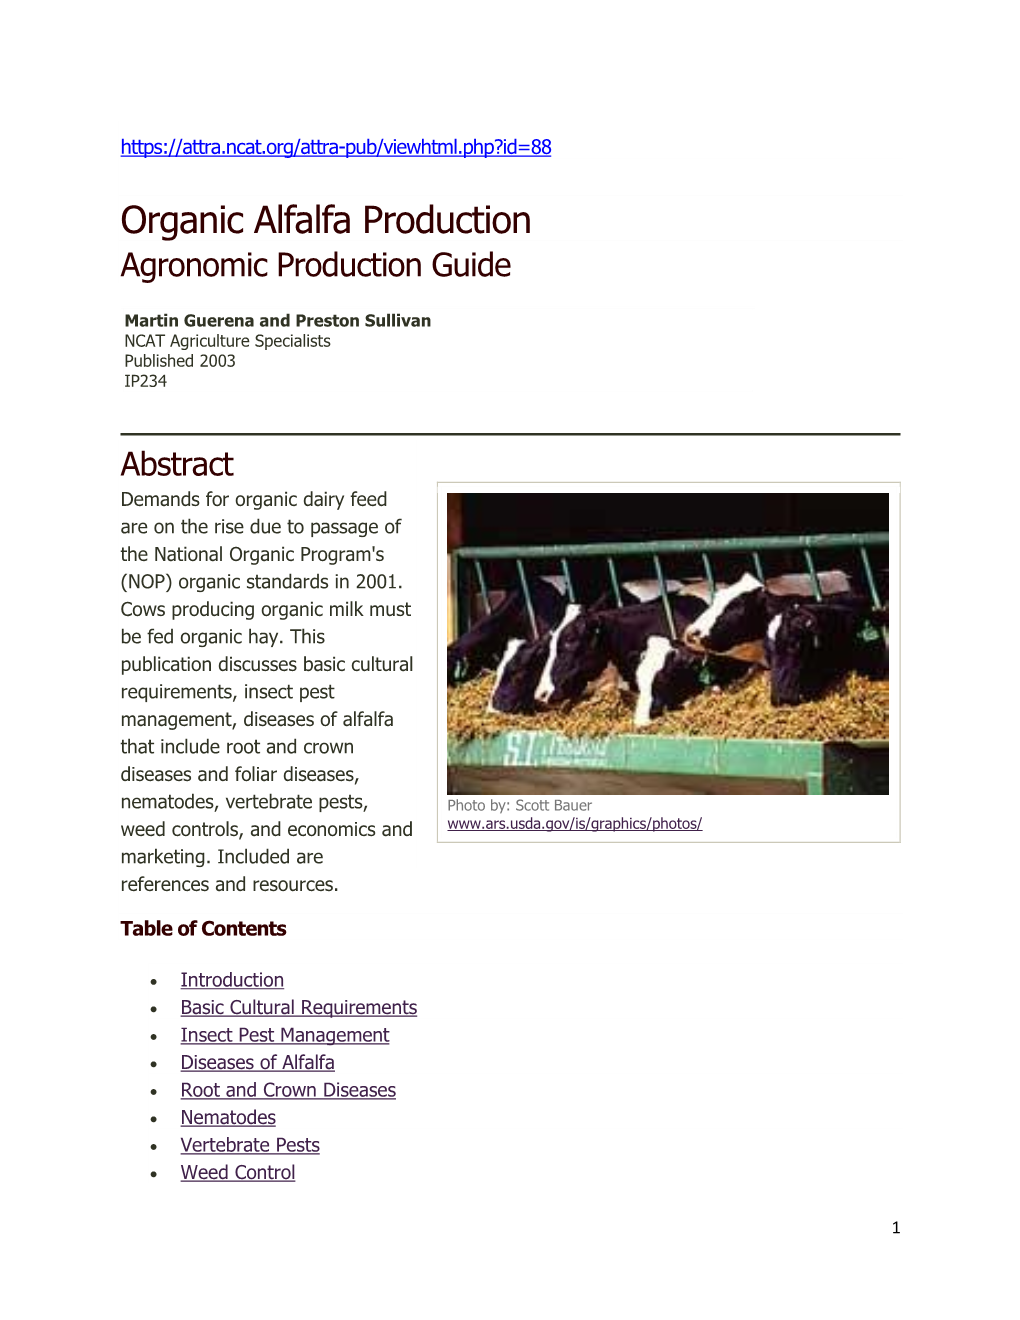 Organic Alfalfa Production Guide